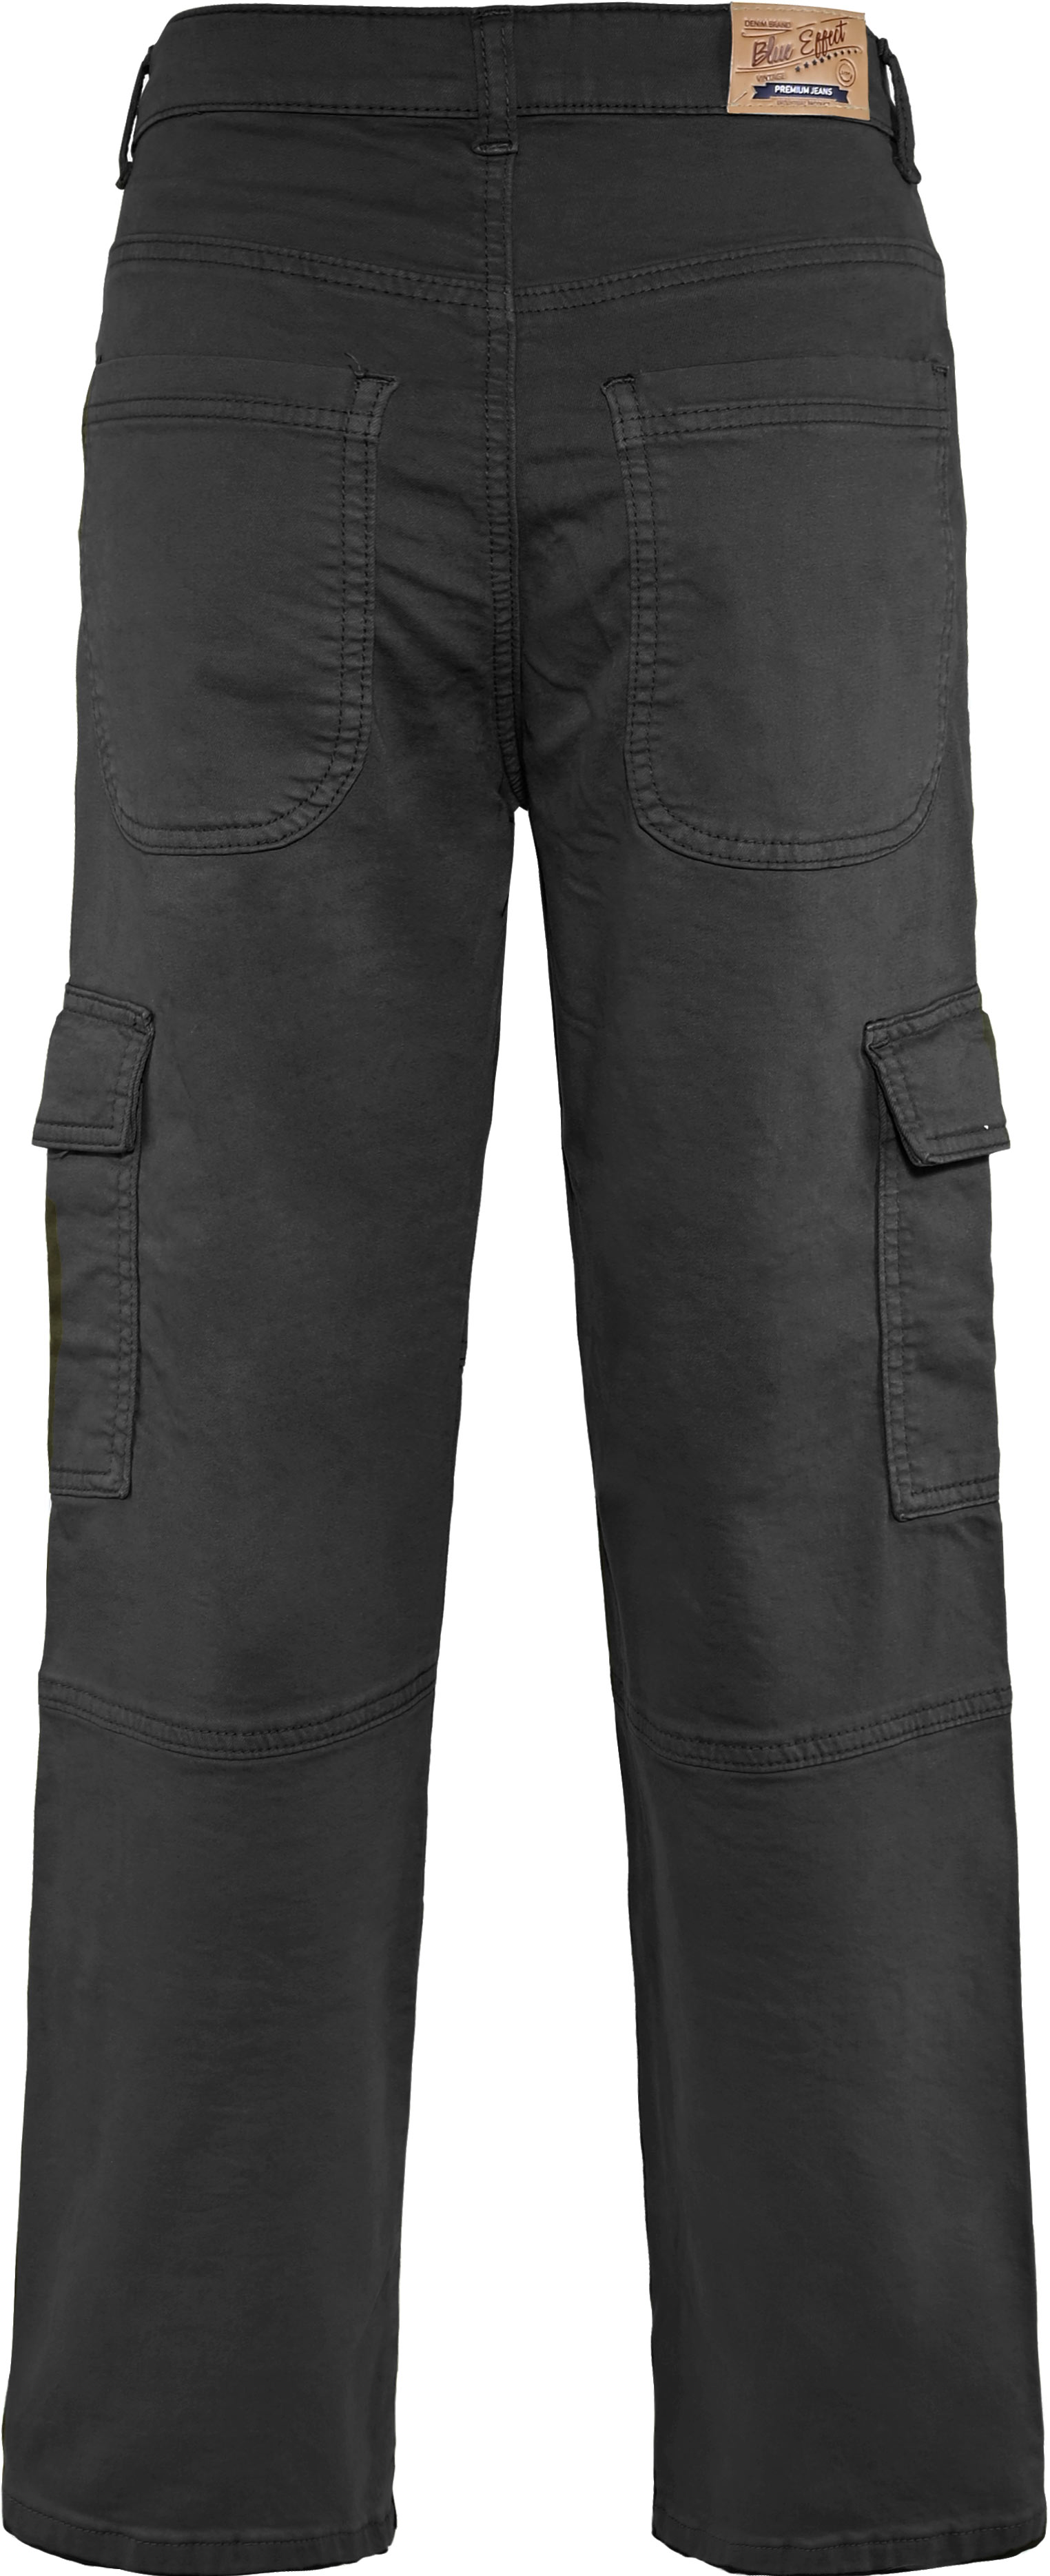 2855-NOS Boys Baggy Cargo Pant verfügbar in Slim,Normal